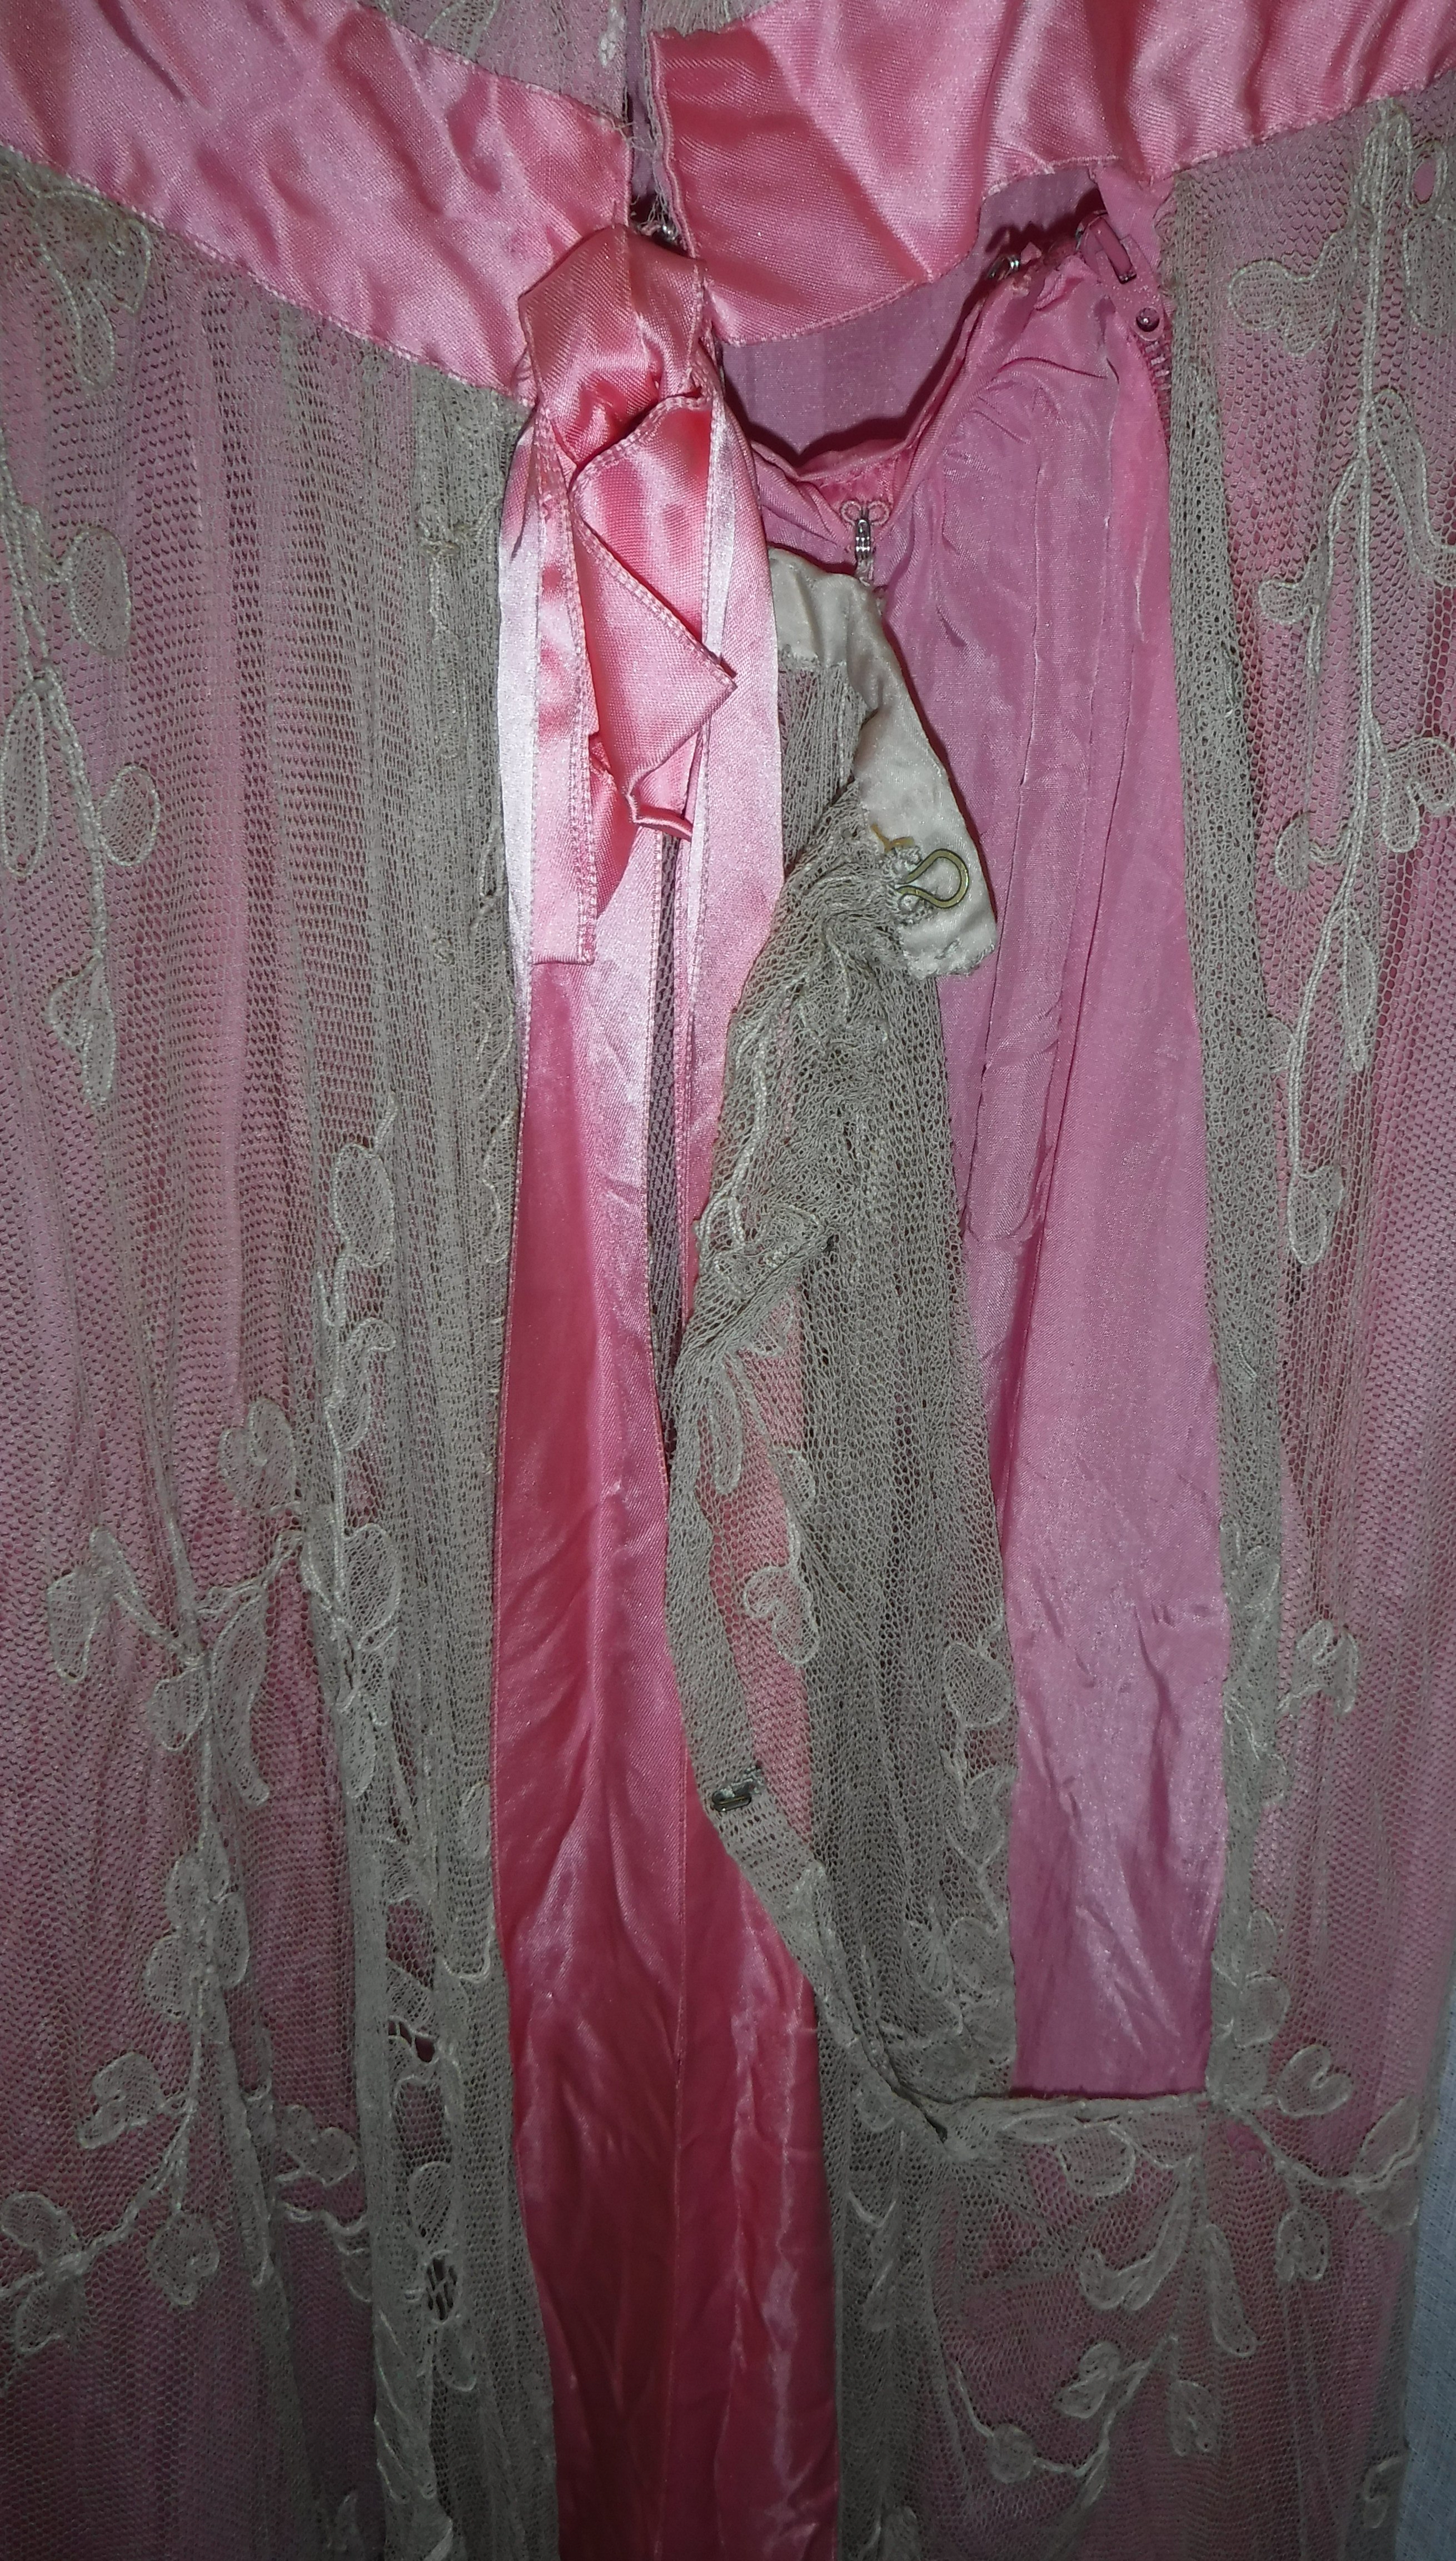 A VINTAGE EDWARDIAN STYLE NOTTINGHAM LACE DRESS, over a pink under slip - Image 3 of 4